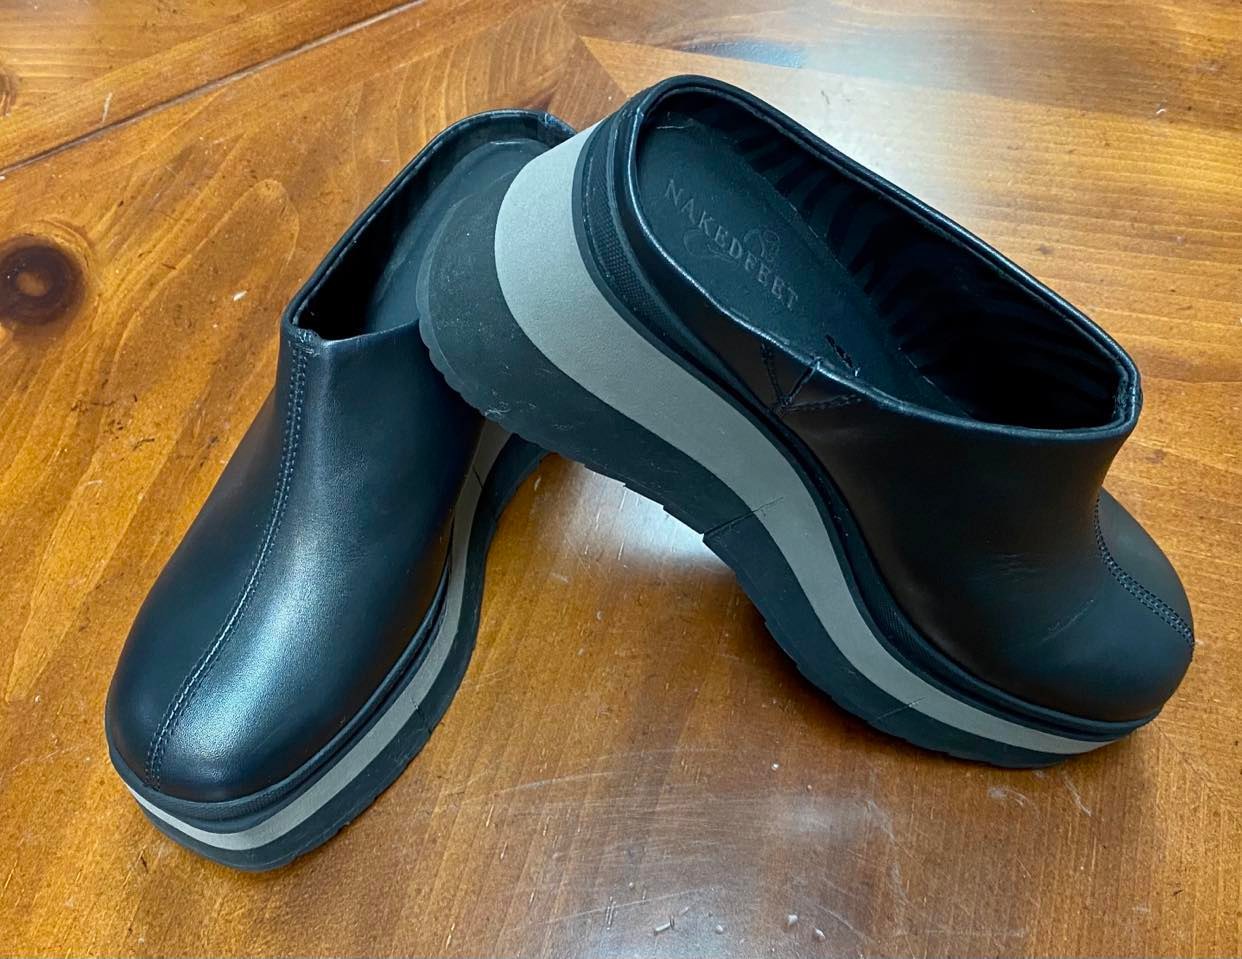 Naked Feet "Coach" Platform Slip On Clog Shoes-Clearance Final Sale